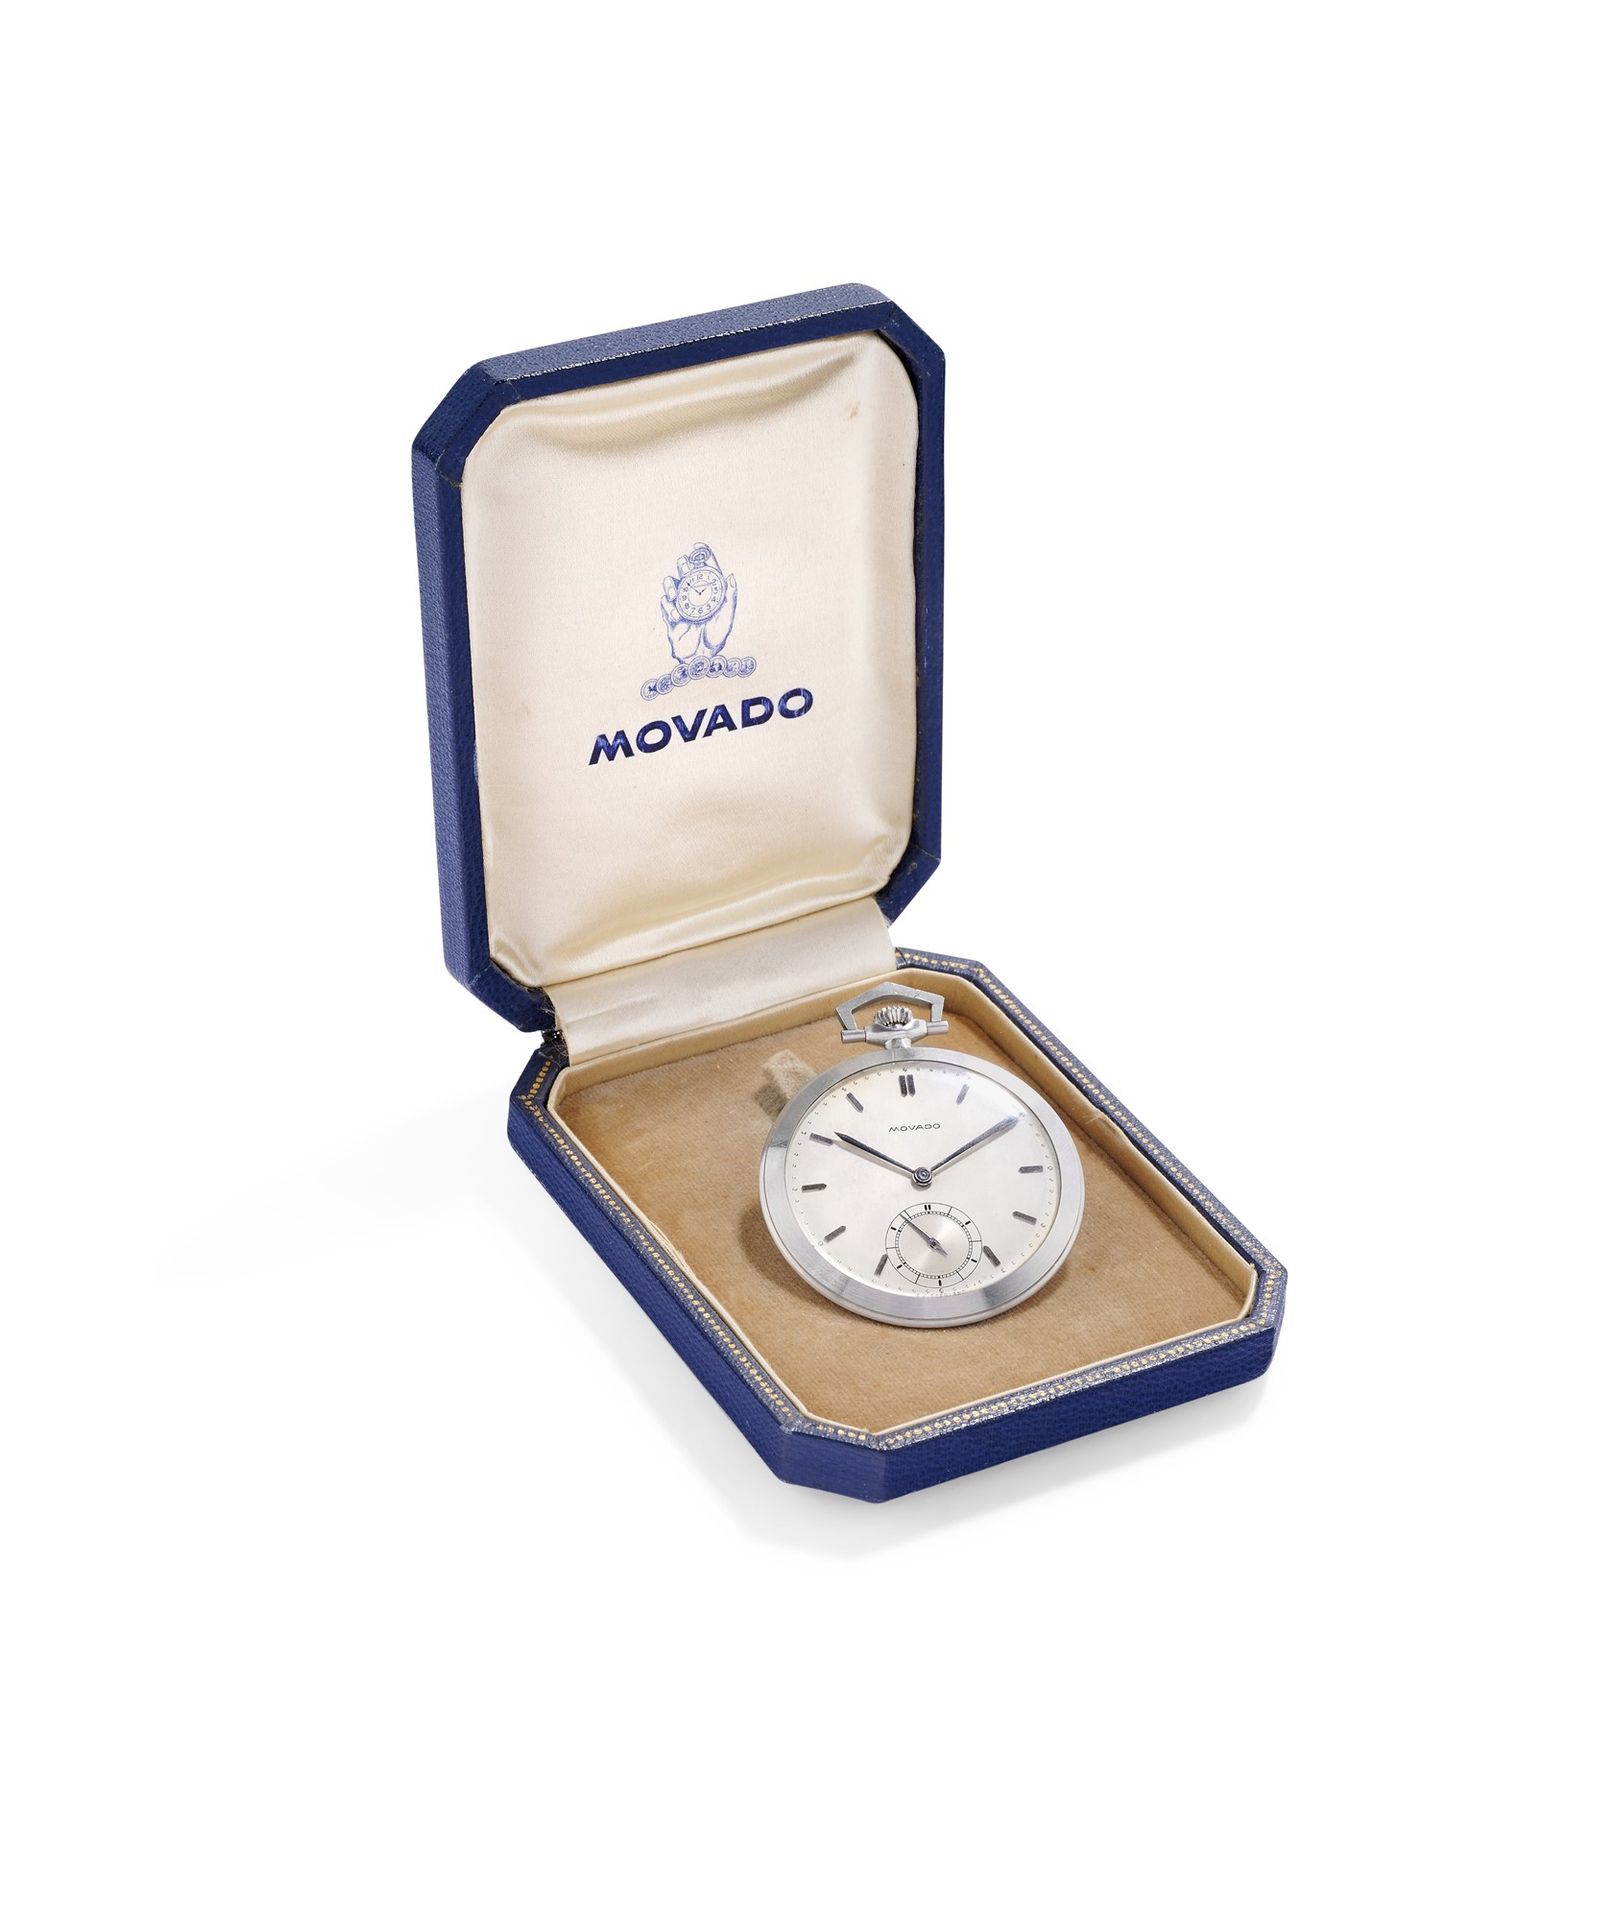 Movado Movado pocket watch, 40s

Platinum coin edge round case, engraved case ba&hellip;